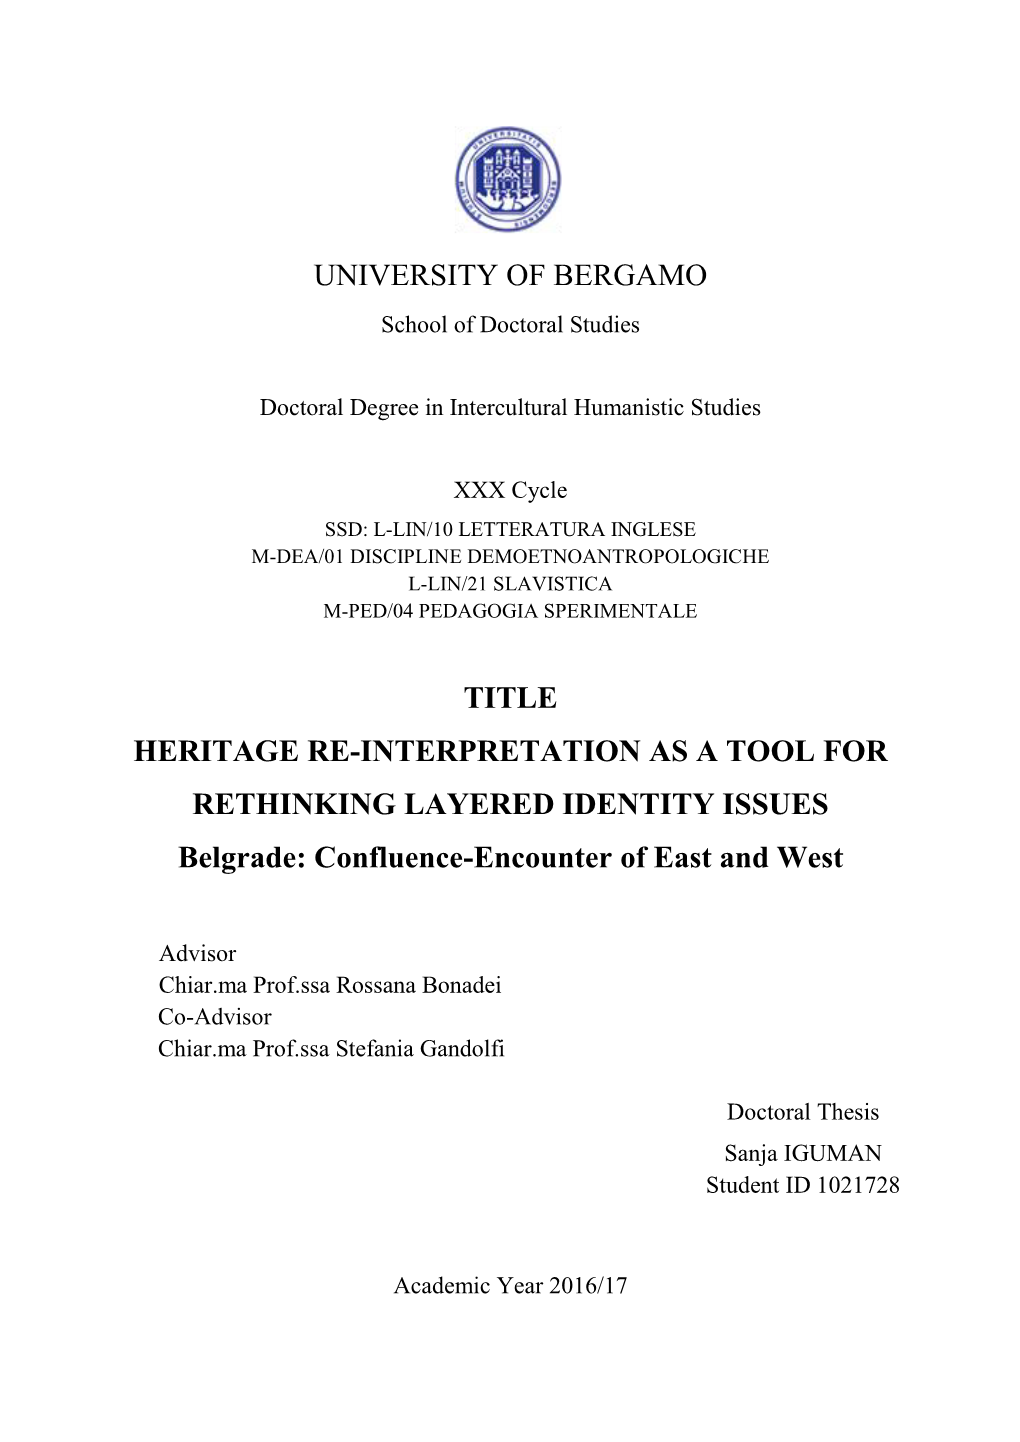 University of Bergamo Title Heritage Re